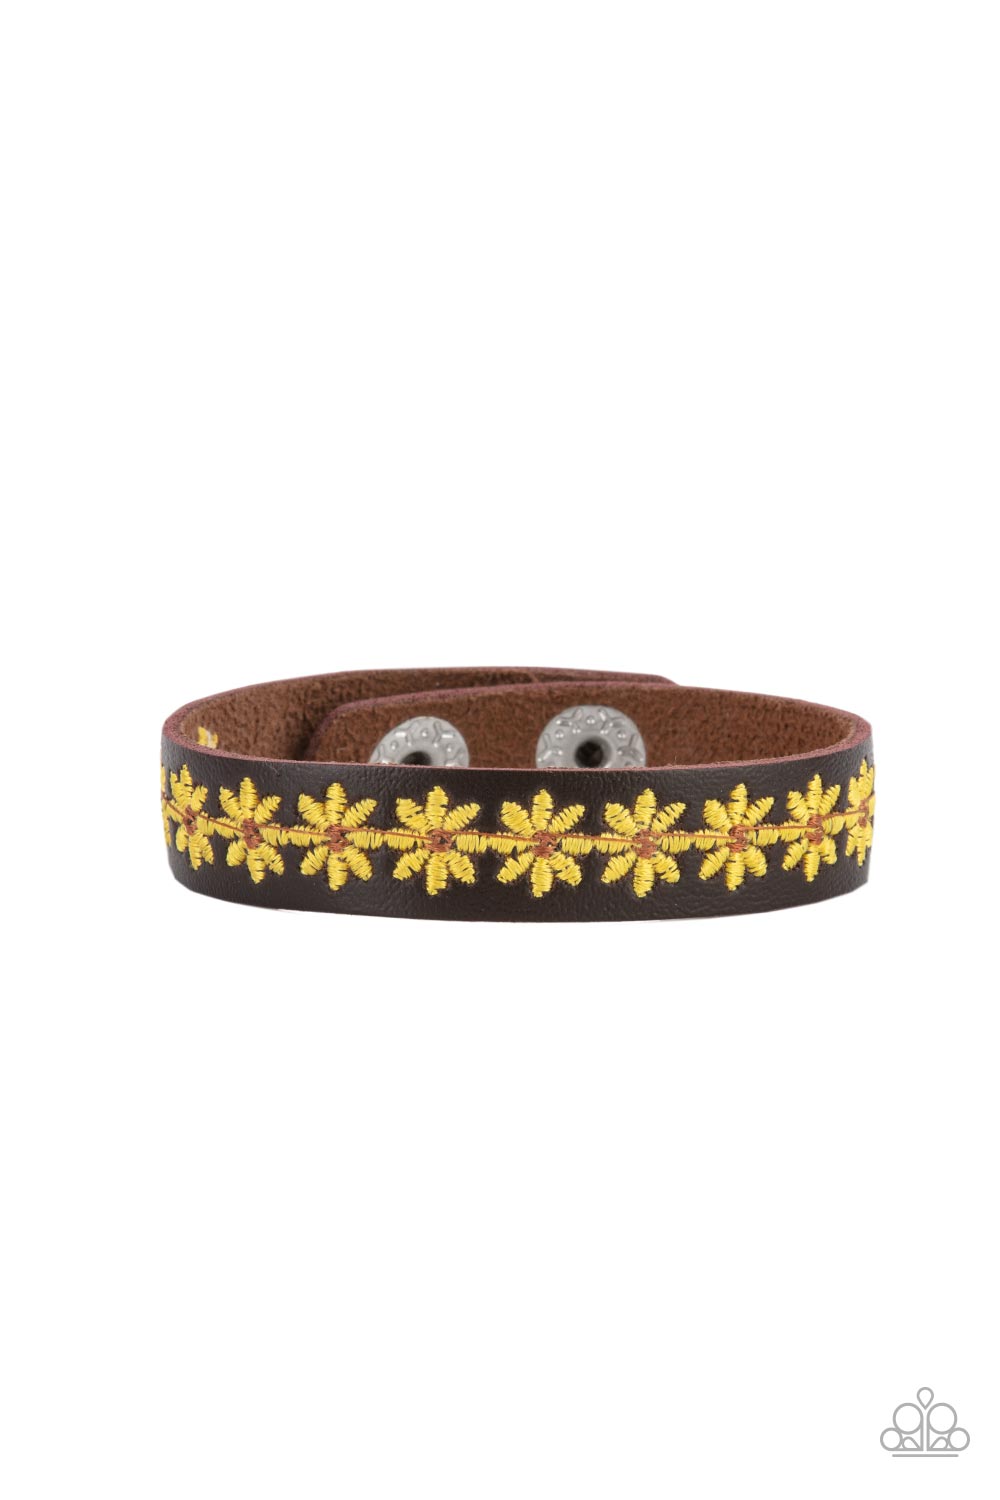 Wildflower Wayfarer Yellow Flower and Brown Leather Urban Wrap Snap Bracelet - Paparazzi Accessories- model - CarasShop.com - $5 Jewelry by Cara Jewels